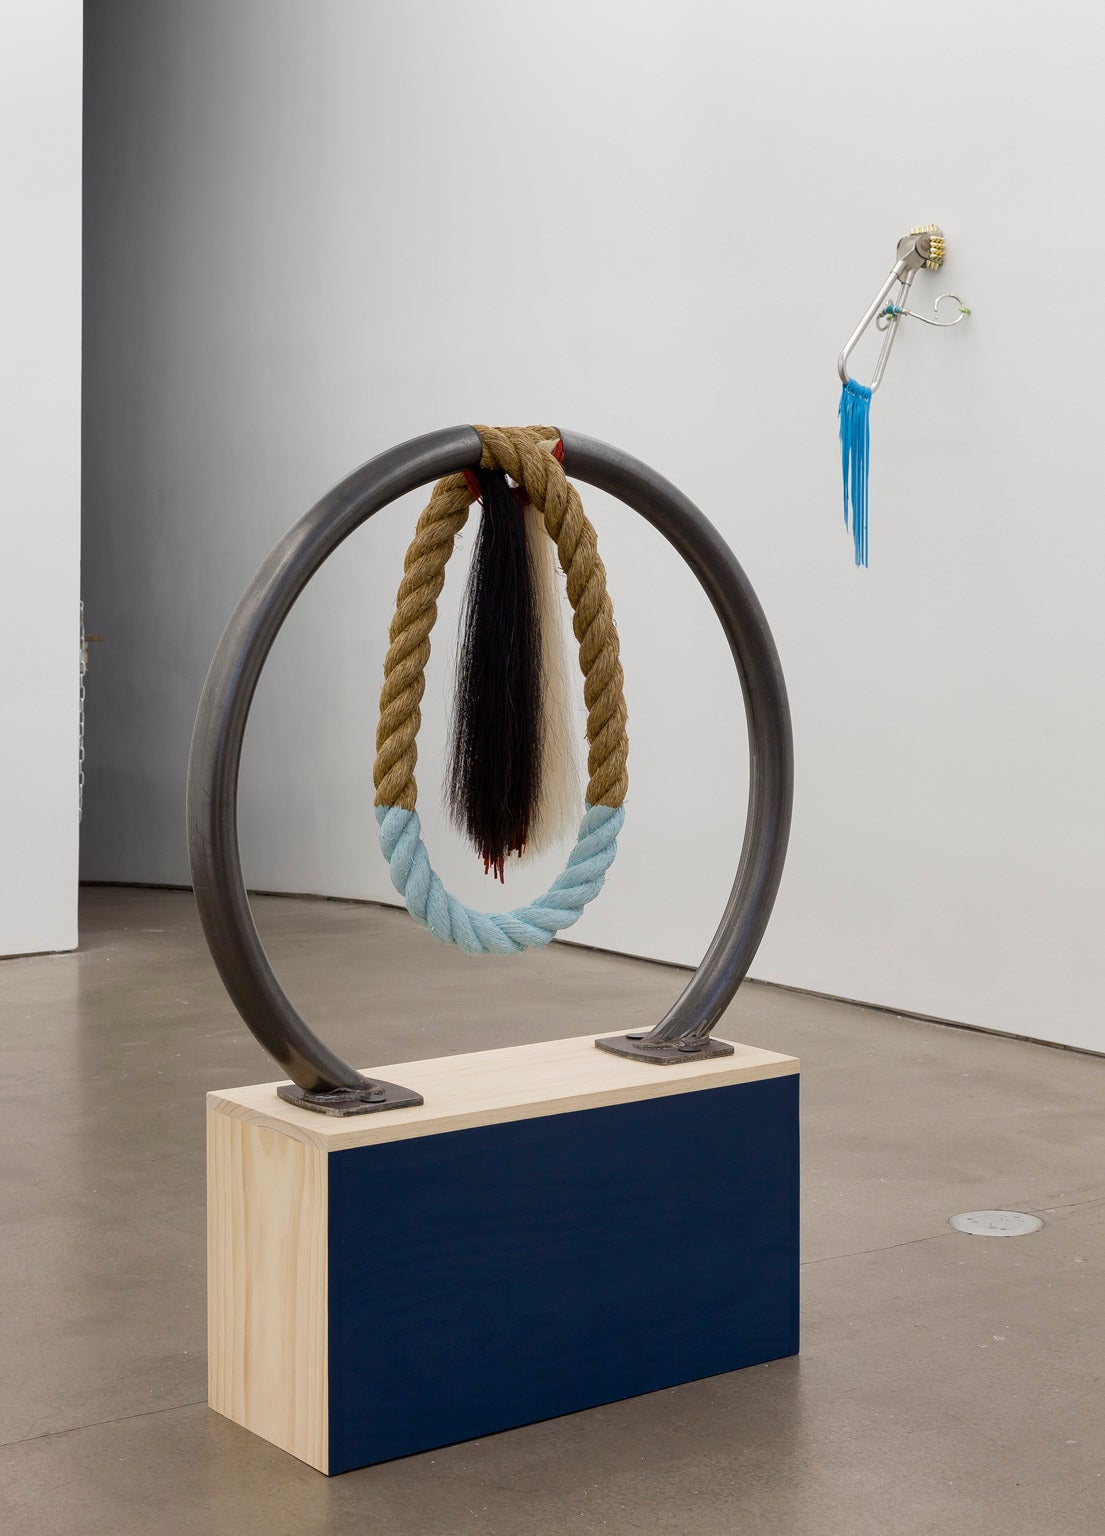 Midpoint Method - Contemporary Sculpture by Trish Tillman